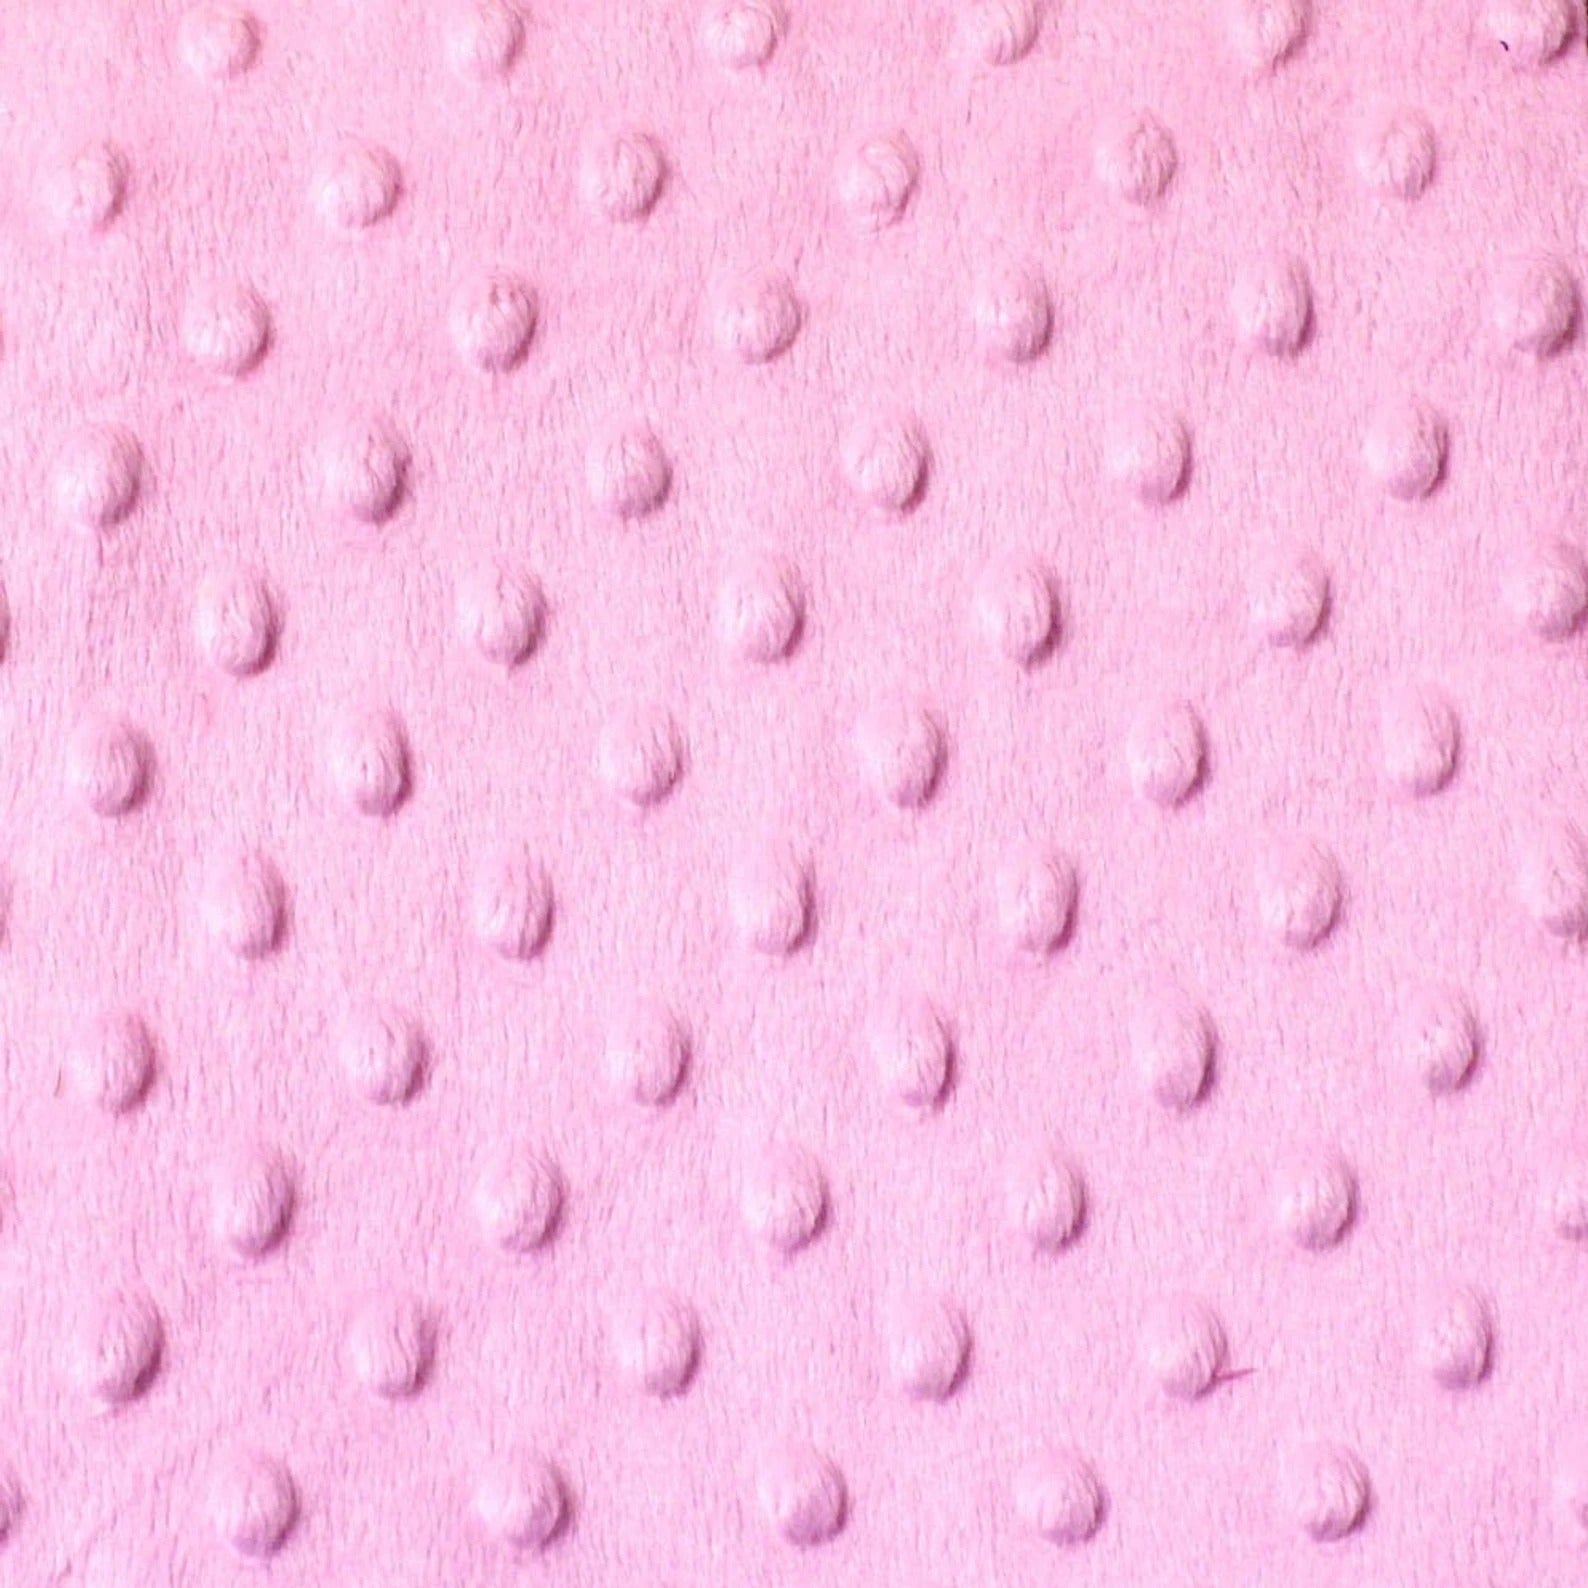 Bubble Polka Dot Minky Fabric By The Roll (20 Yards) Wholesale FabricMinkyICEFABRICICE FABRICSLight PinkBy The Roll (60" Wide)Bubble Polka Dot Minky Fabric By The Roll (20 Yards) Wholesale Fabric ICEFABRIC Light Pink